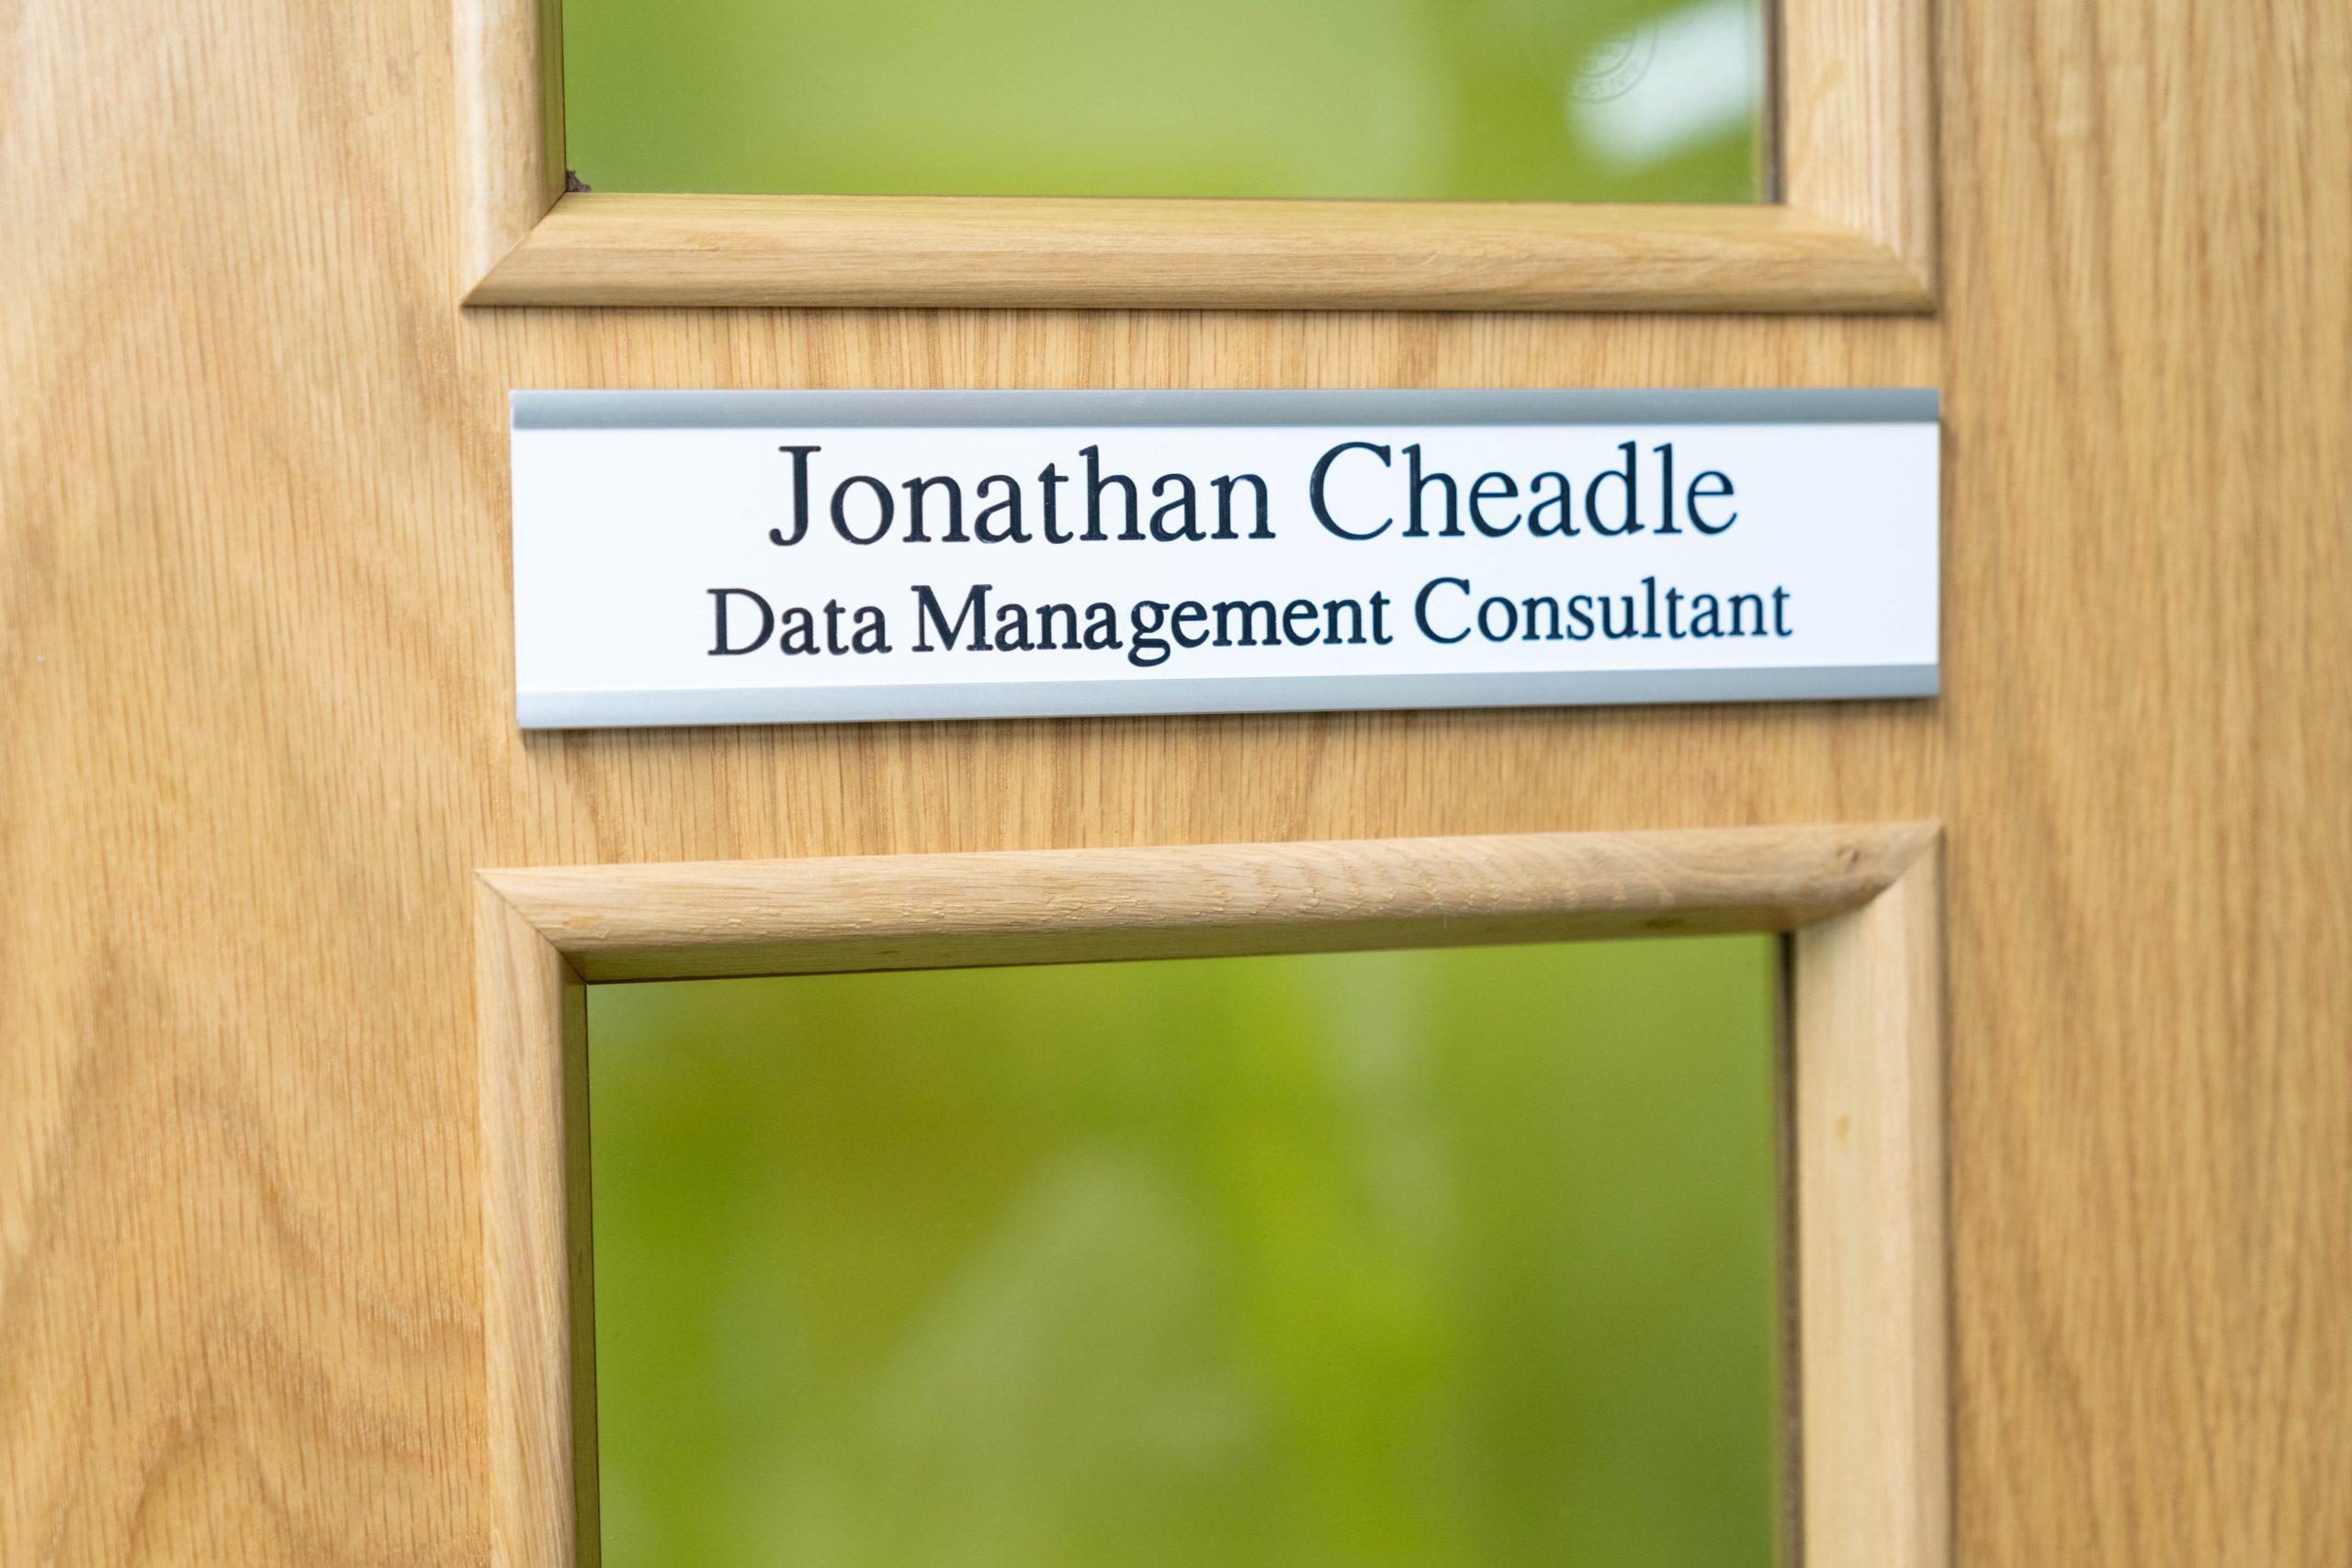 Image featuring a 10" x 2" interchangeable aluminum office door sign, sleek and modern